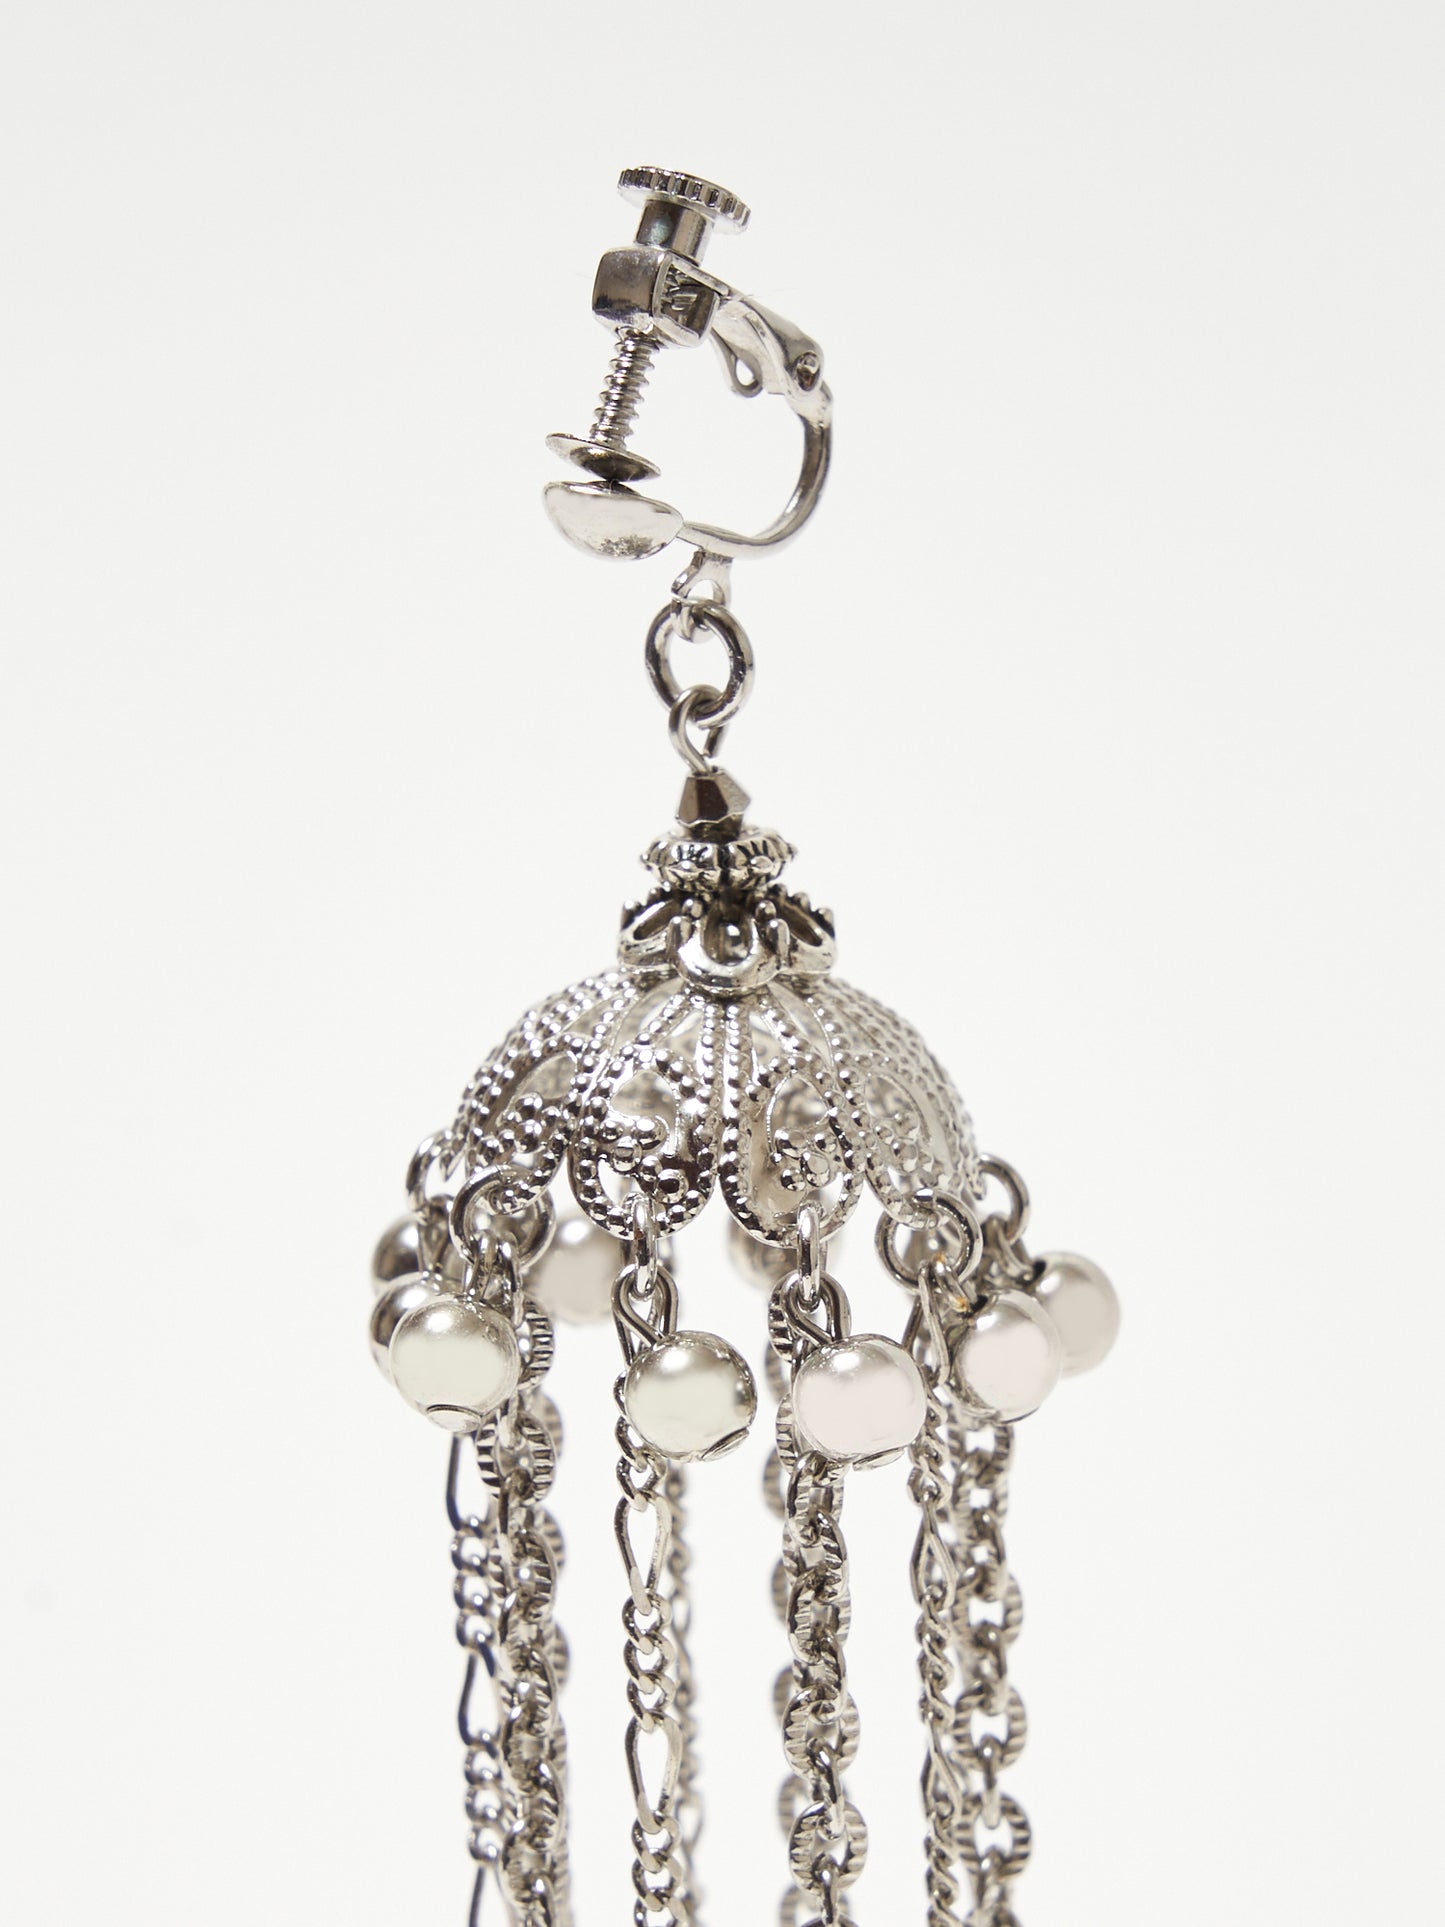 silver studs tassel earrings【Delivery in August 2023】